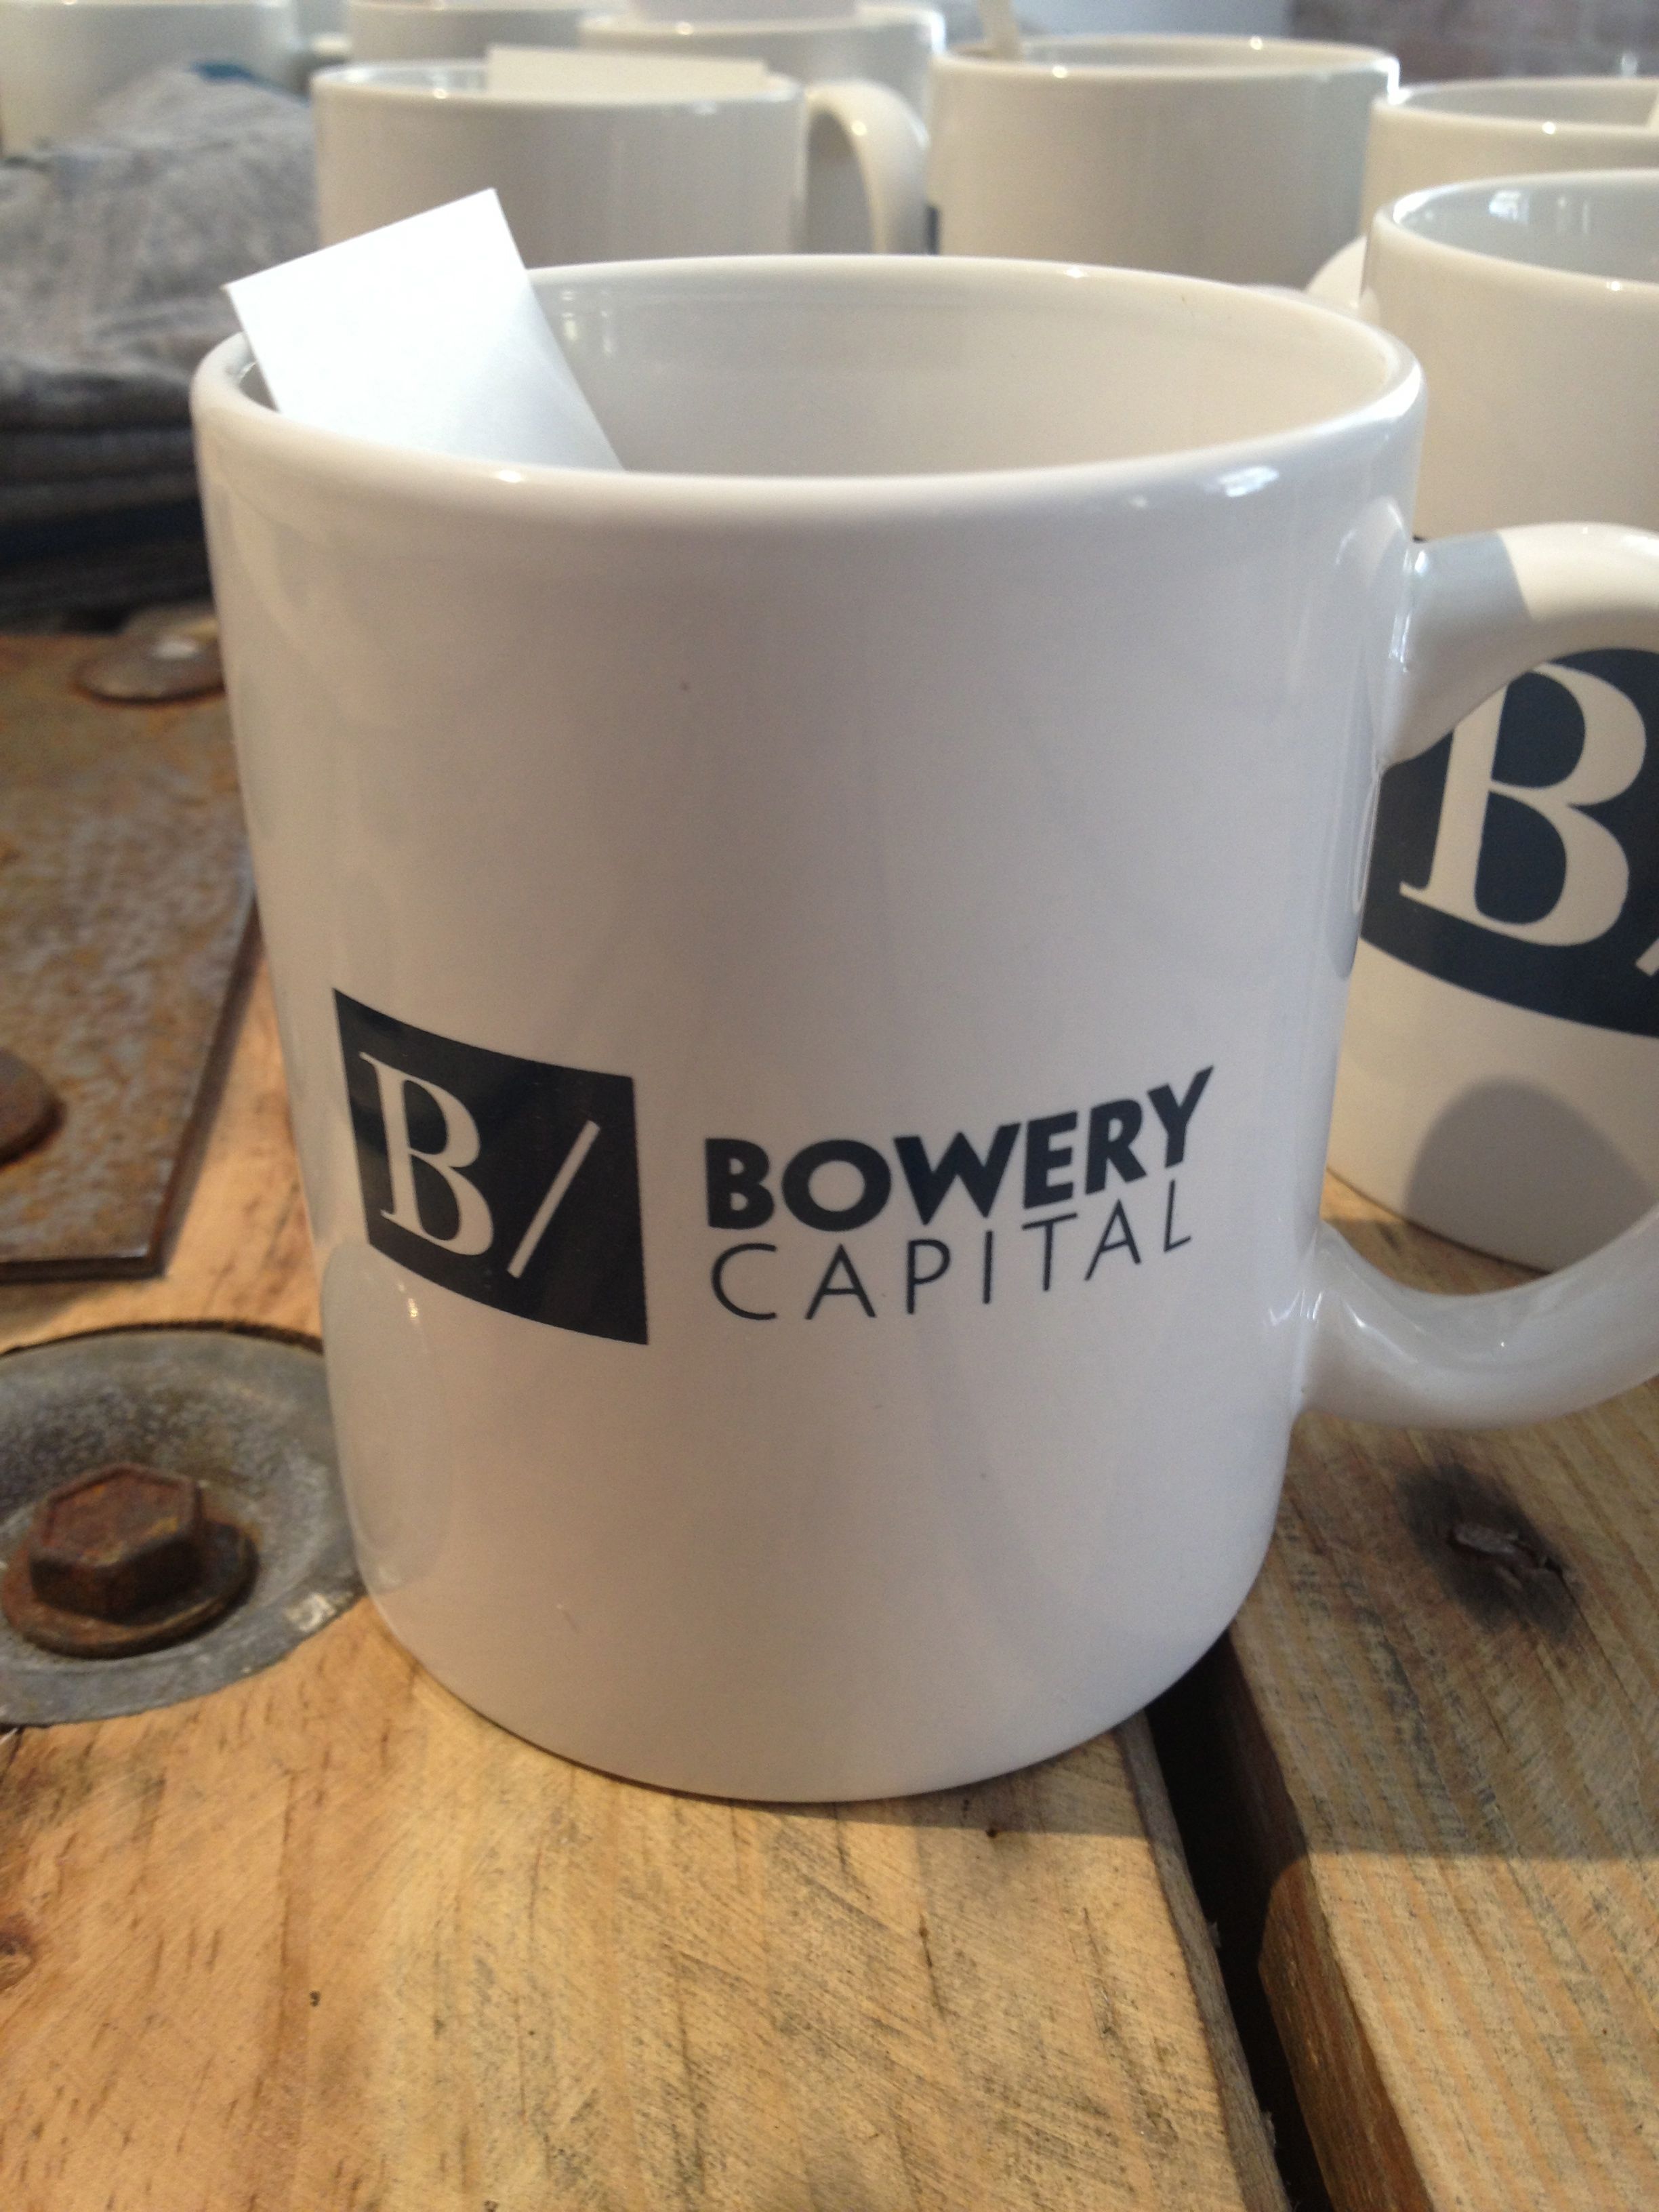 A mug with a logo that isn't Aol Ventures. 